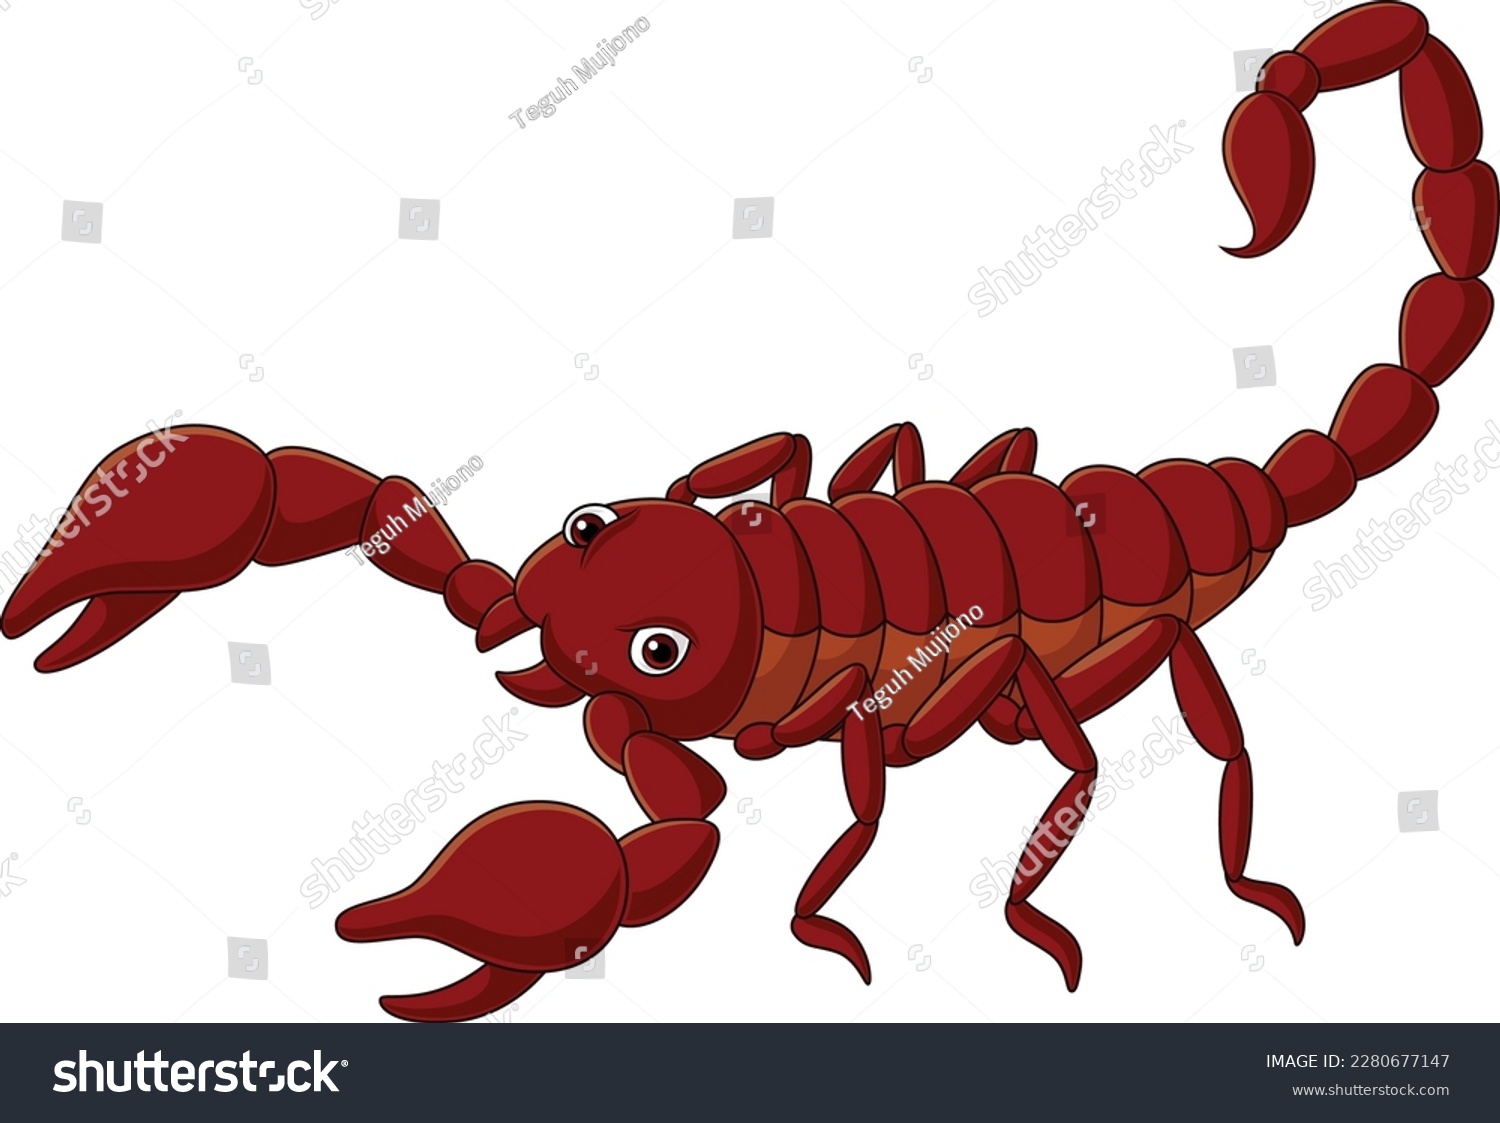 SVG of Cartoon scorpion on white background svg